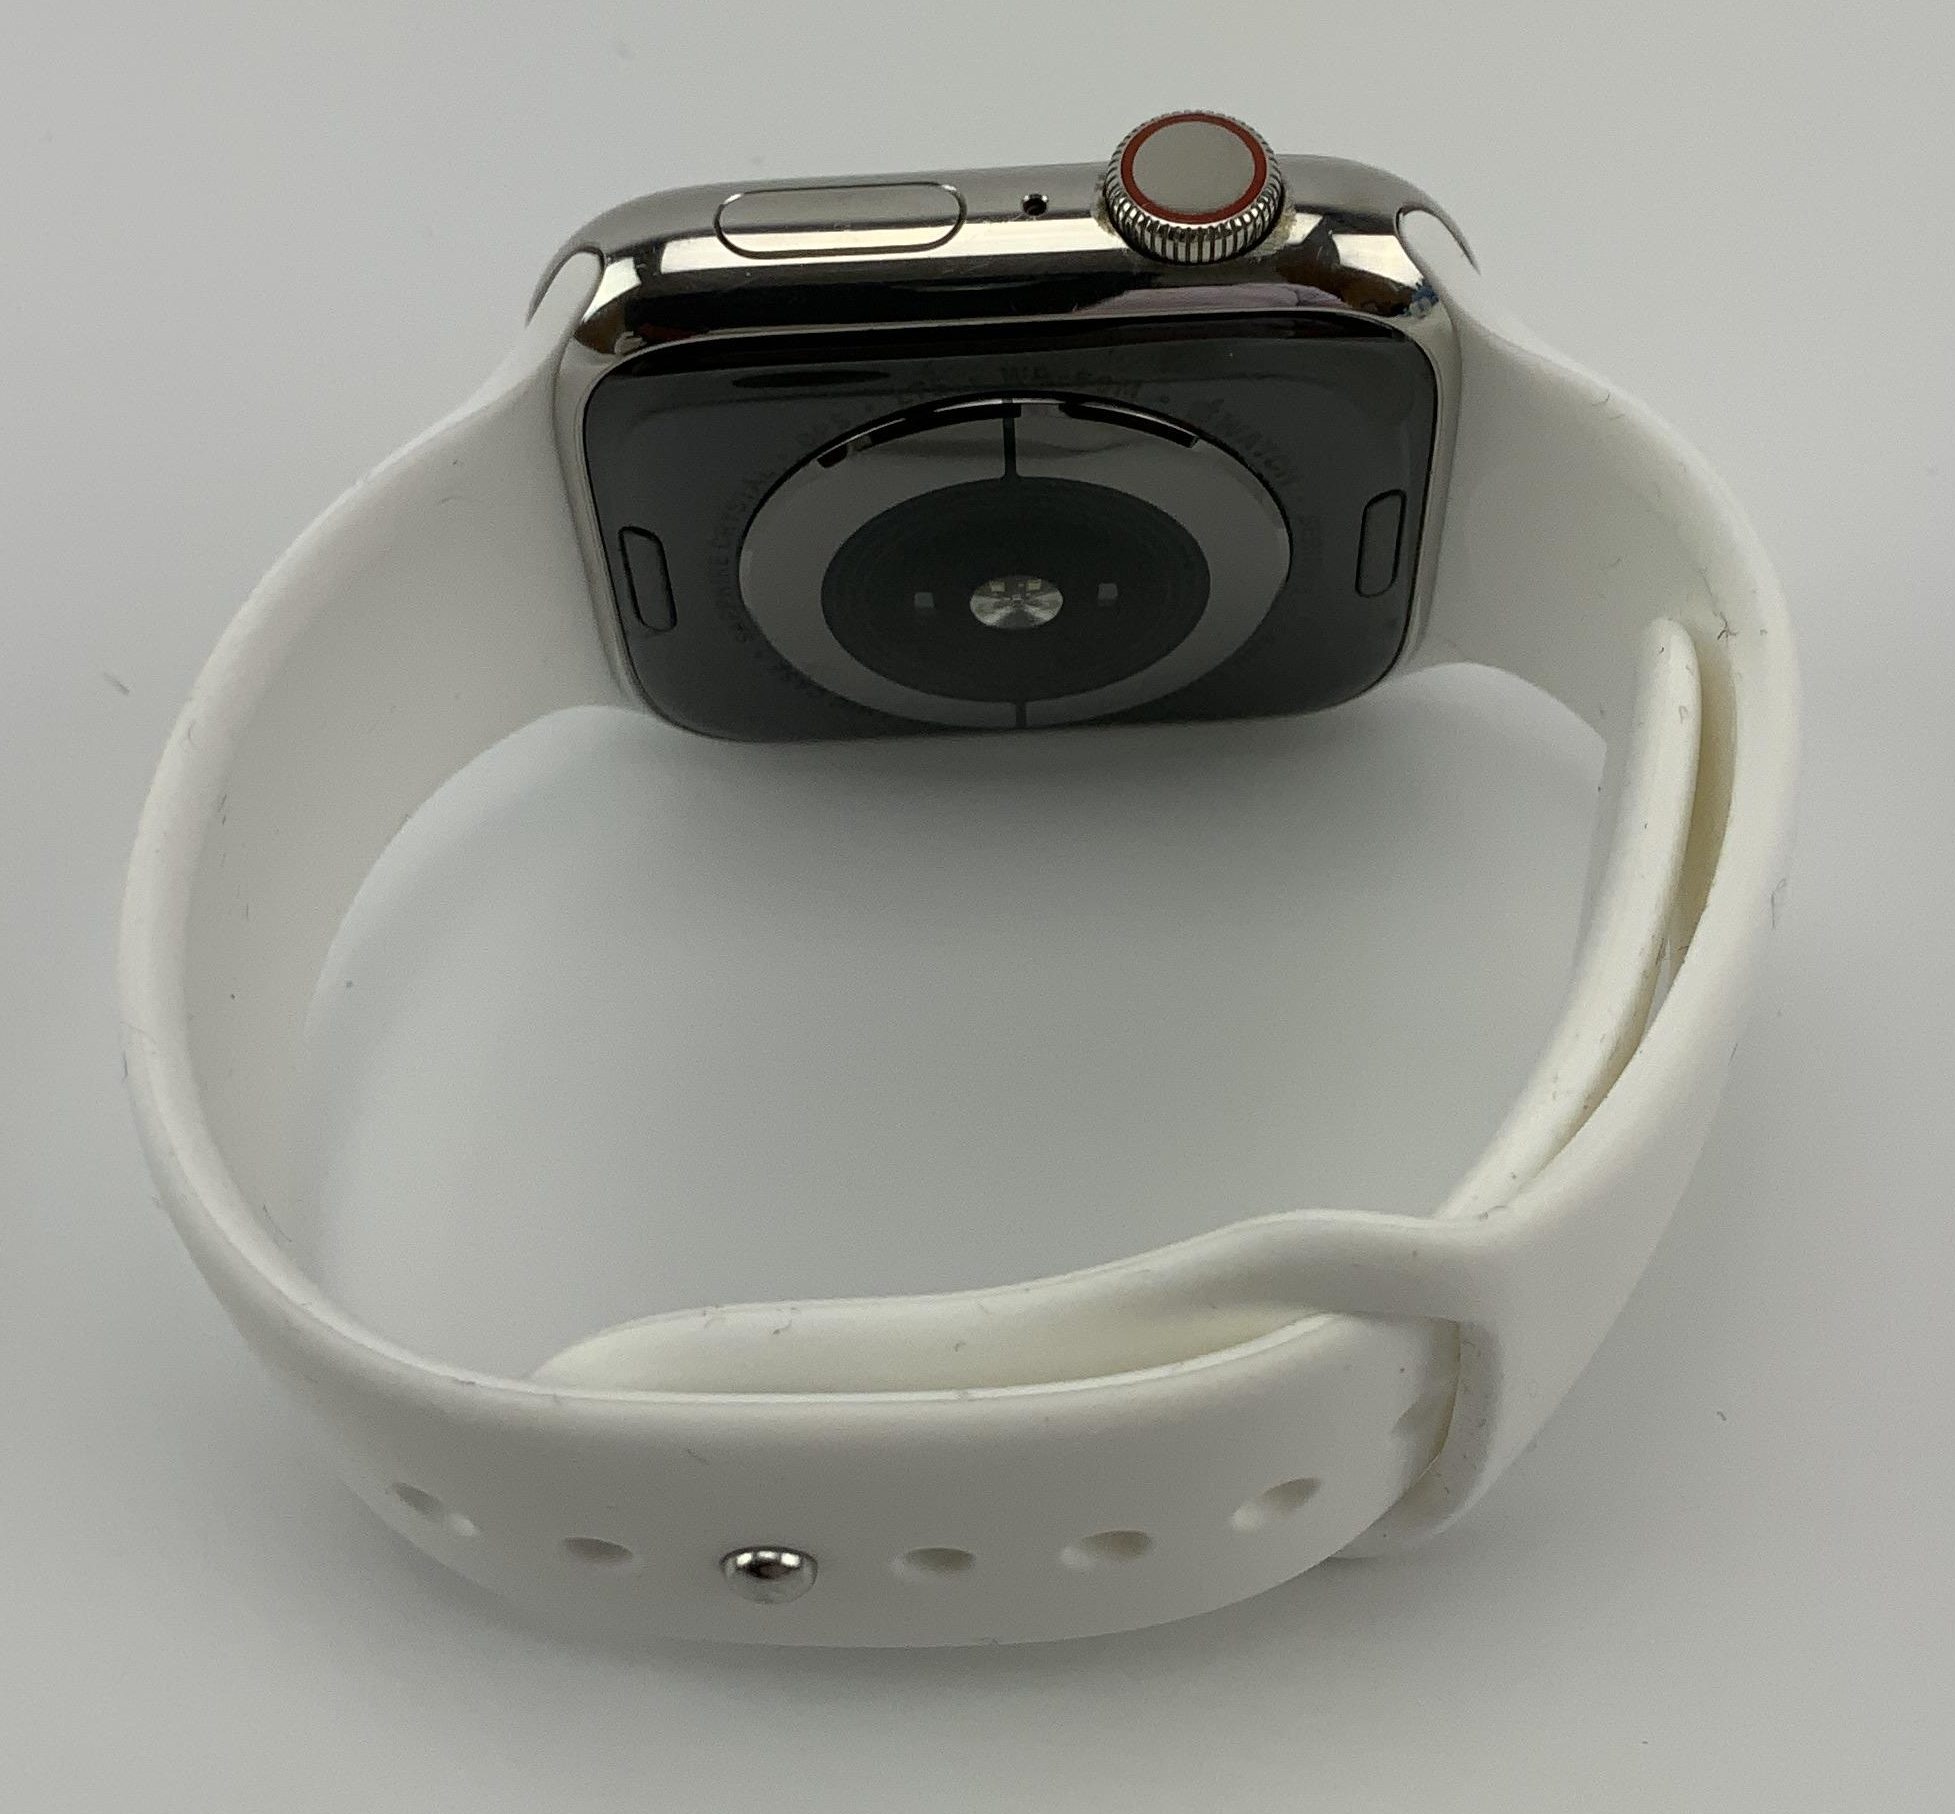 Watch Series 5 Steel Cellular (44mm), Silver, imagen 4